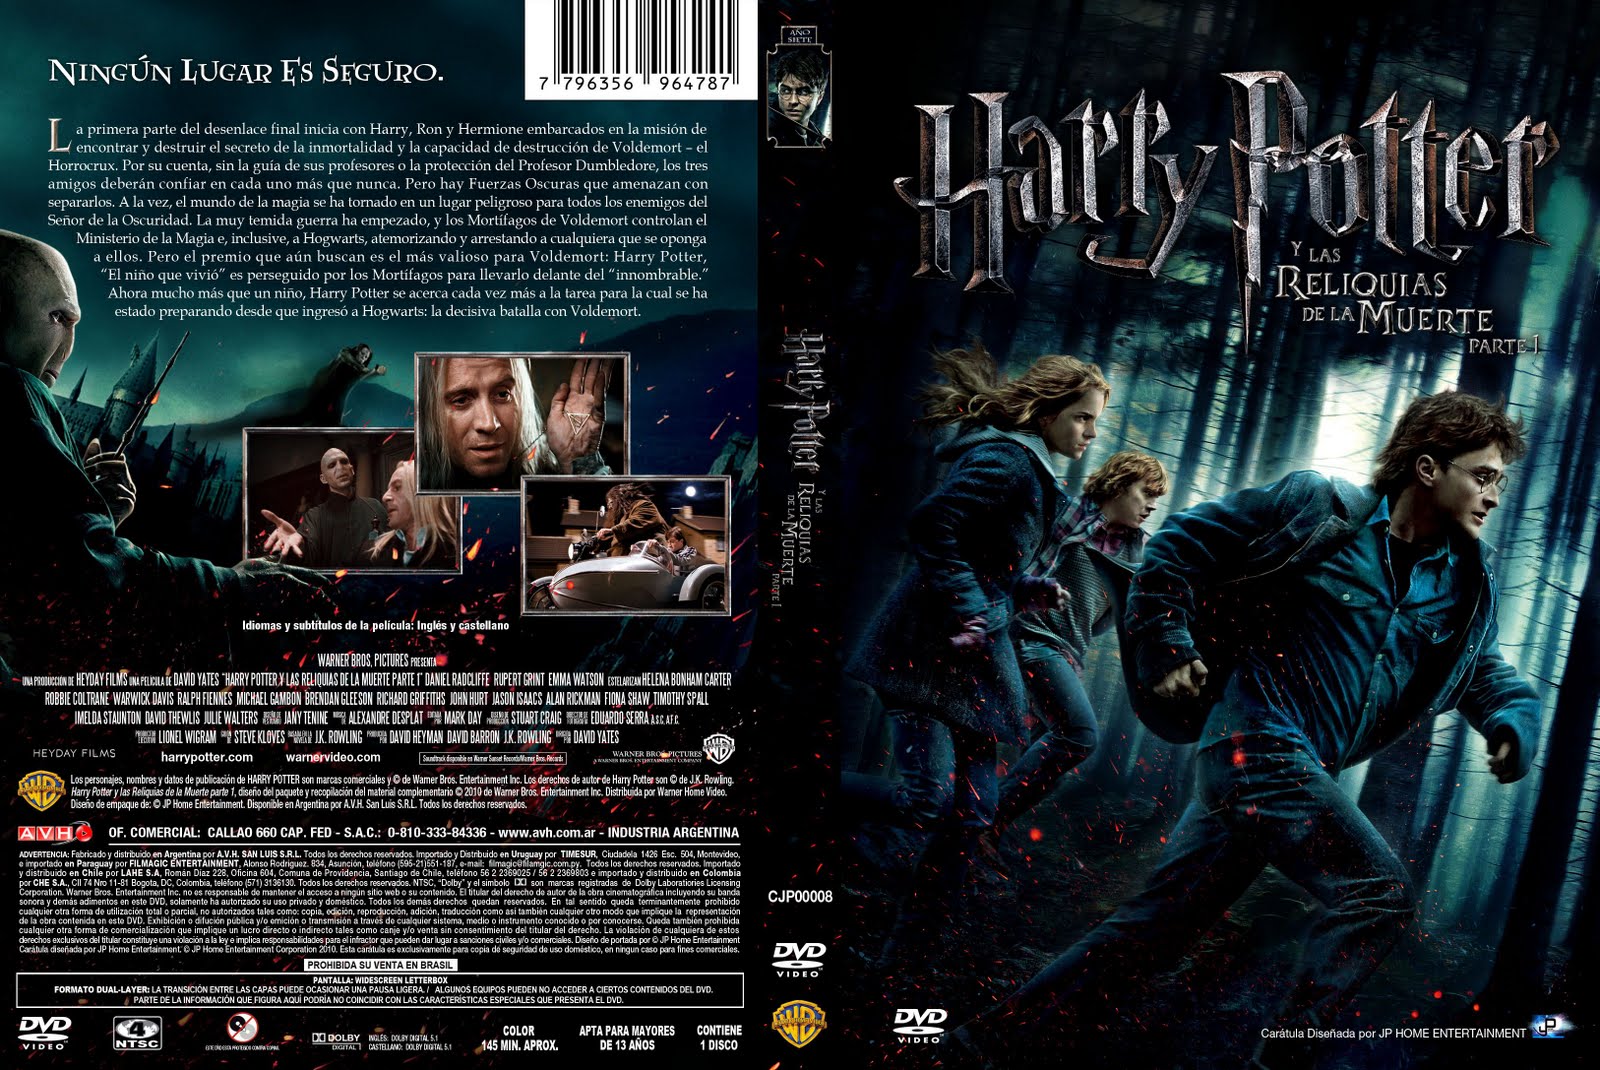 Peliculas en dvd: Harry Potter 7 reliquias de la muerte ...